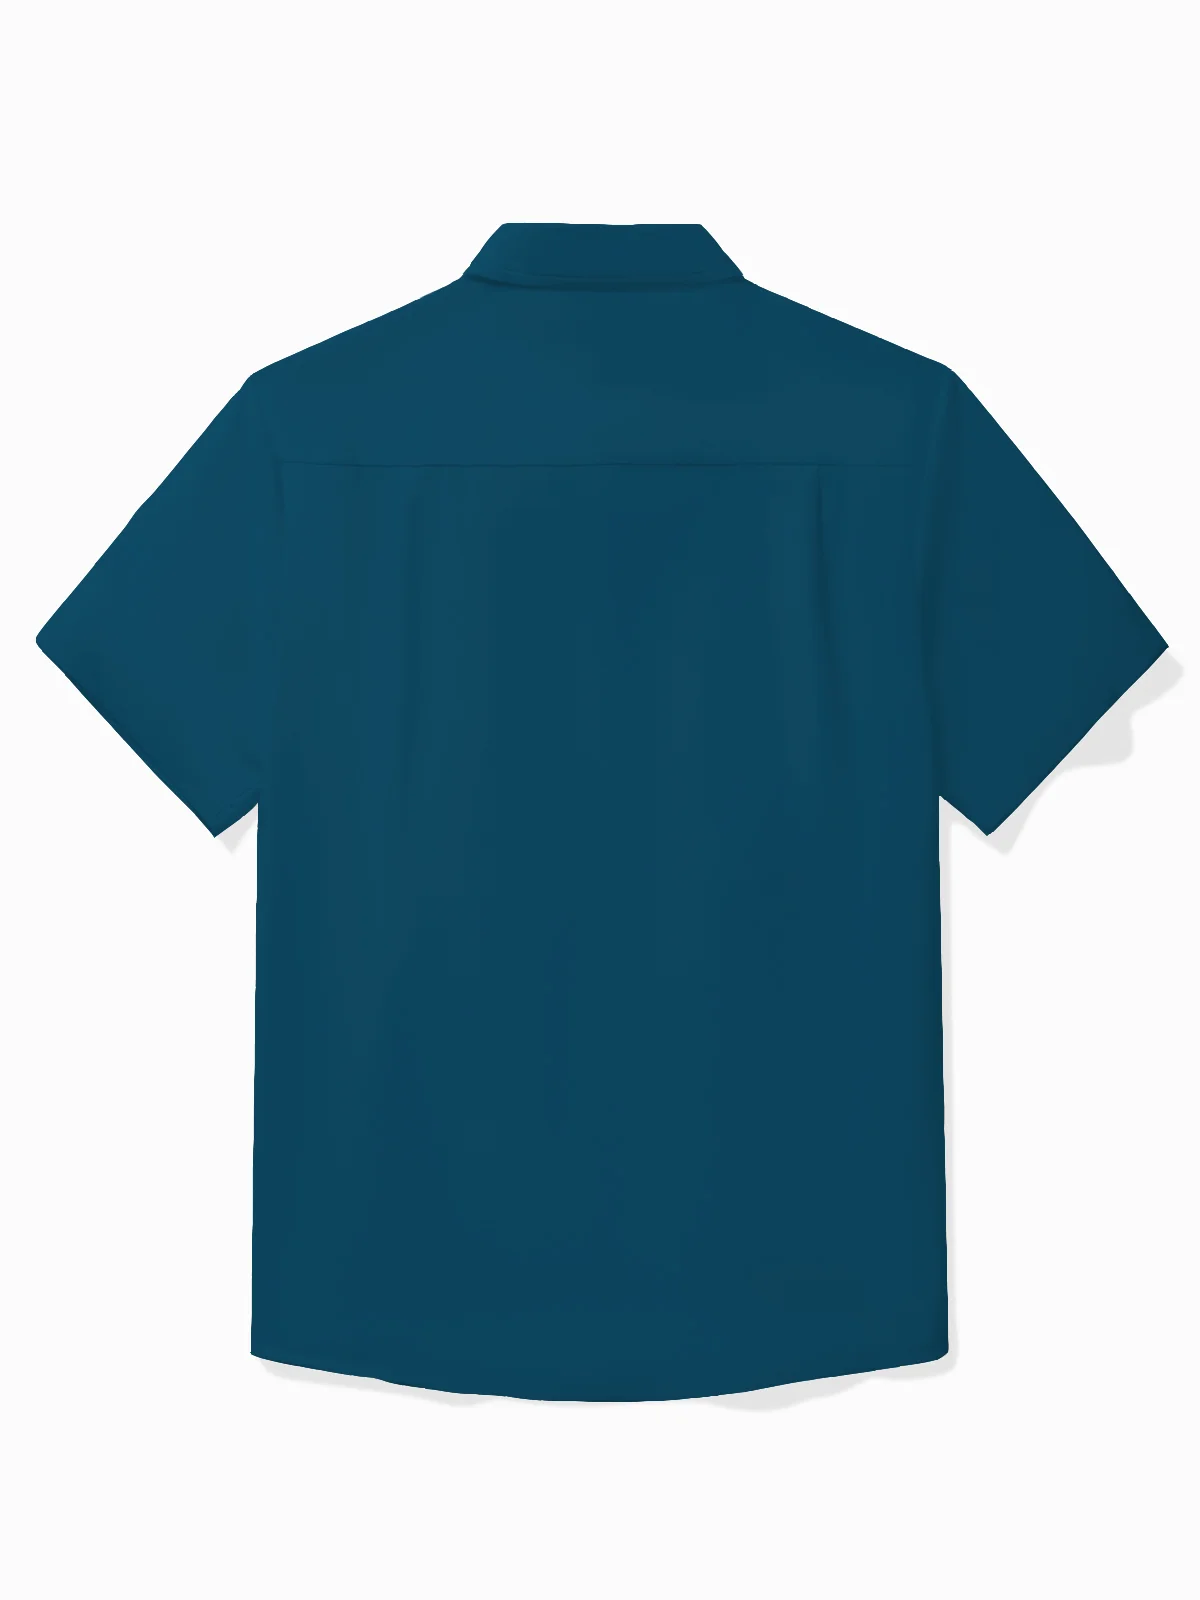 Royaura® Vintage Bowling Pinstripe Tiki Mask Print Chest Pocket Shirt Plus Size Men's Shirt